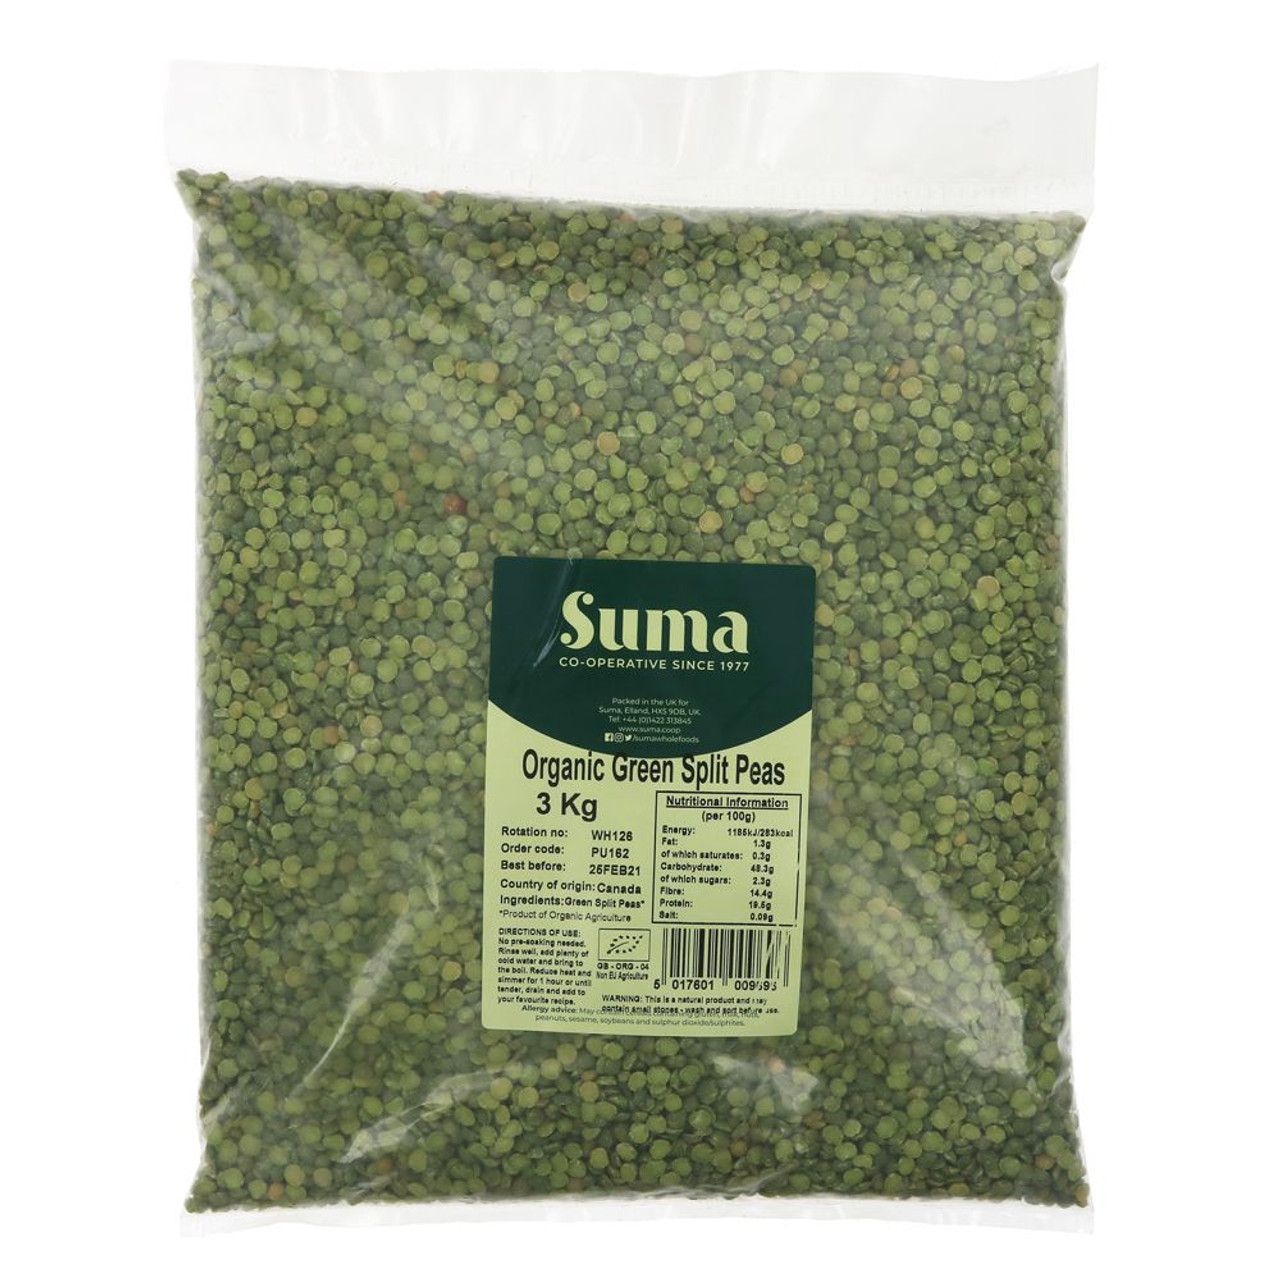 SUMA - ORGANIC GREEN SPLIT PEAS - 3KG